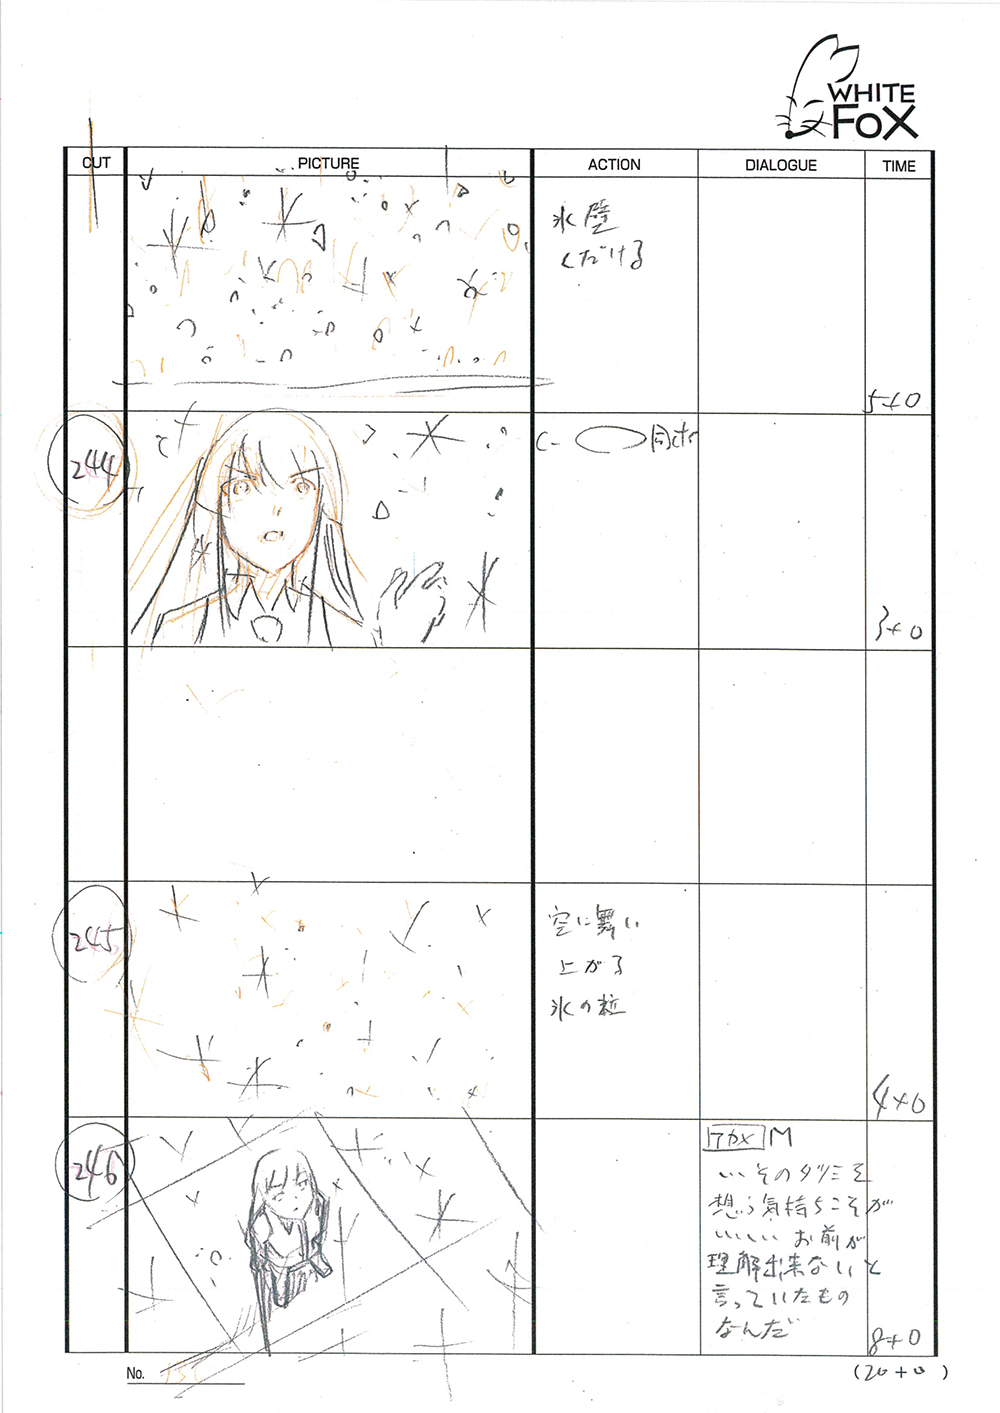 Akame ga Kill Episode 24 Storyboard Leak 139